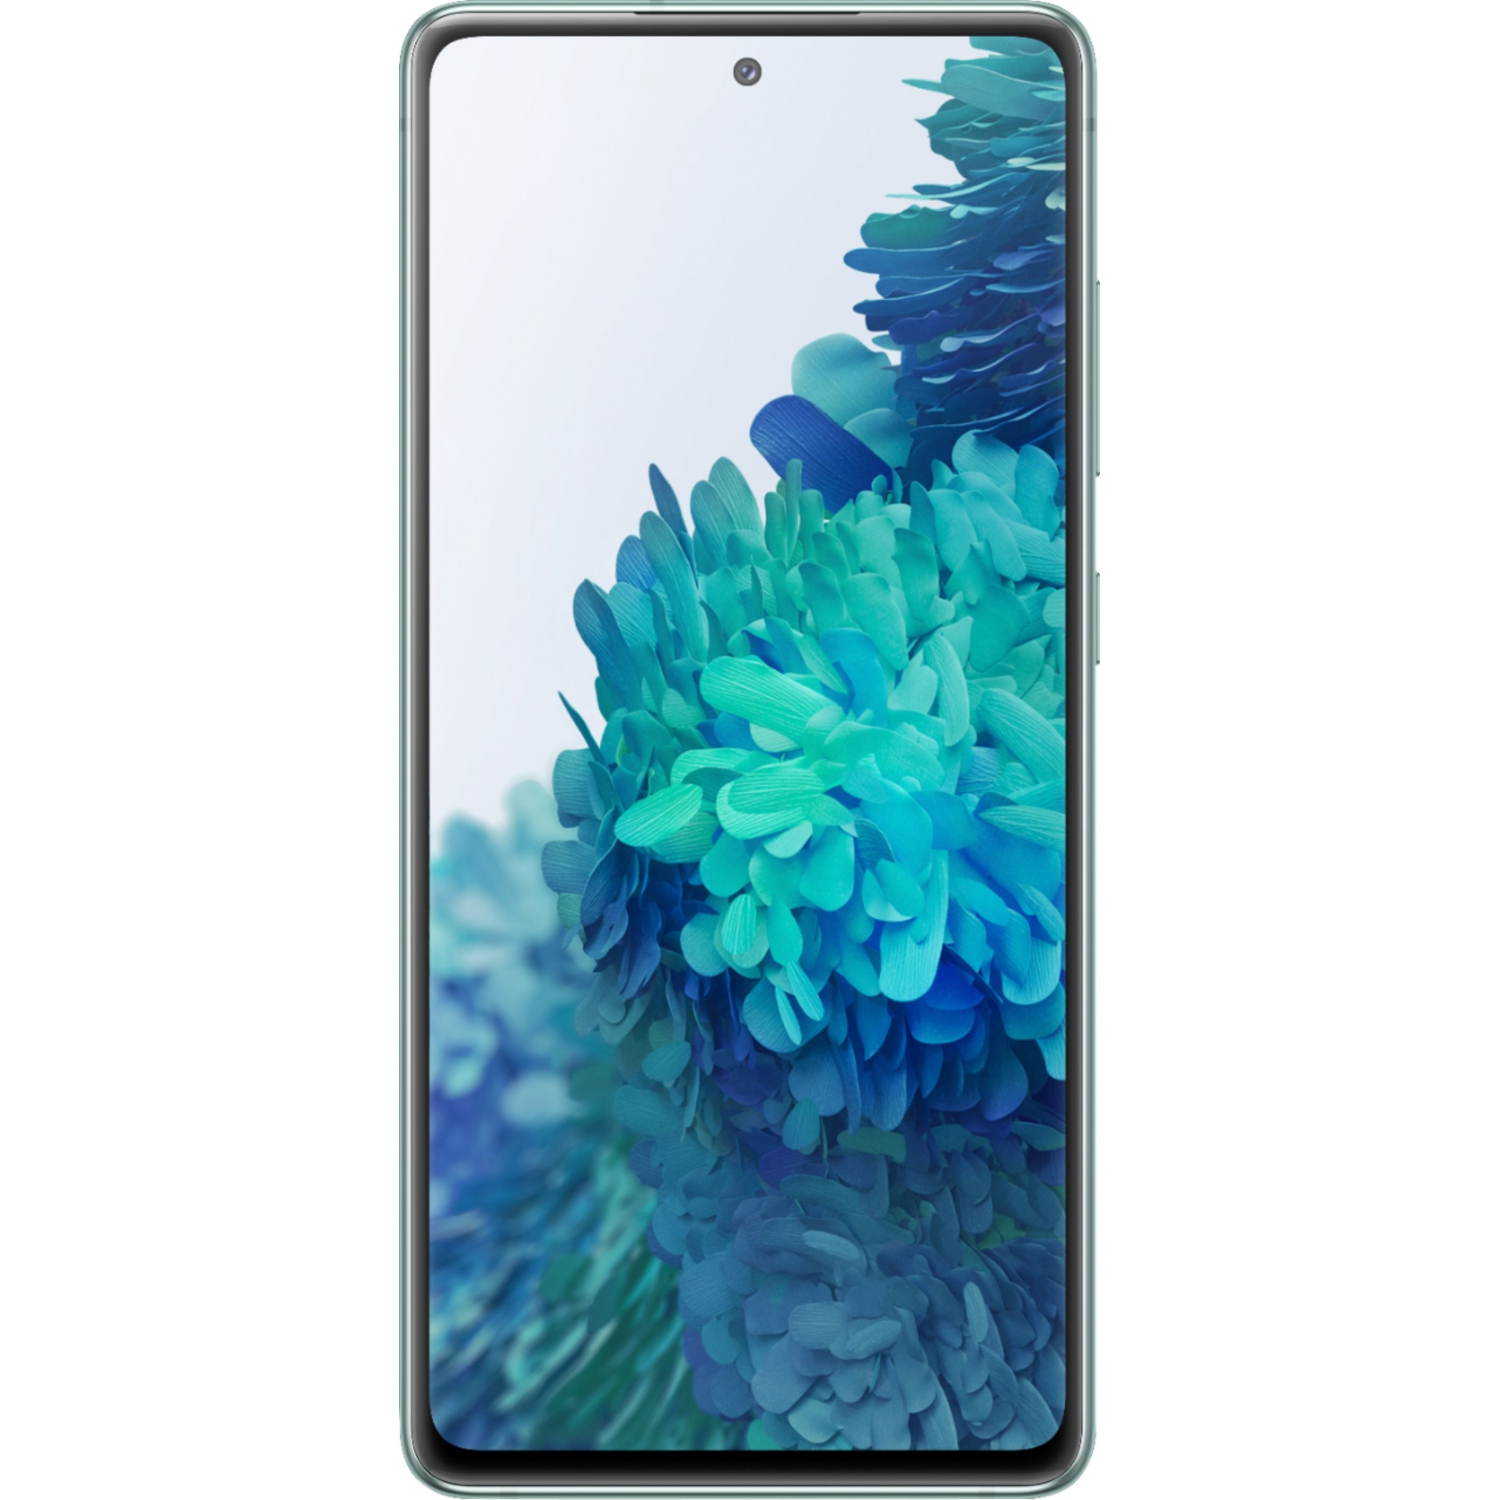 Samsung Galaxy S20 FE 5G 128GB Smartphone - Cloud Mint - Unlocked